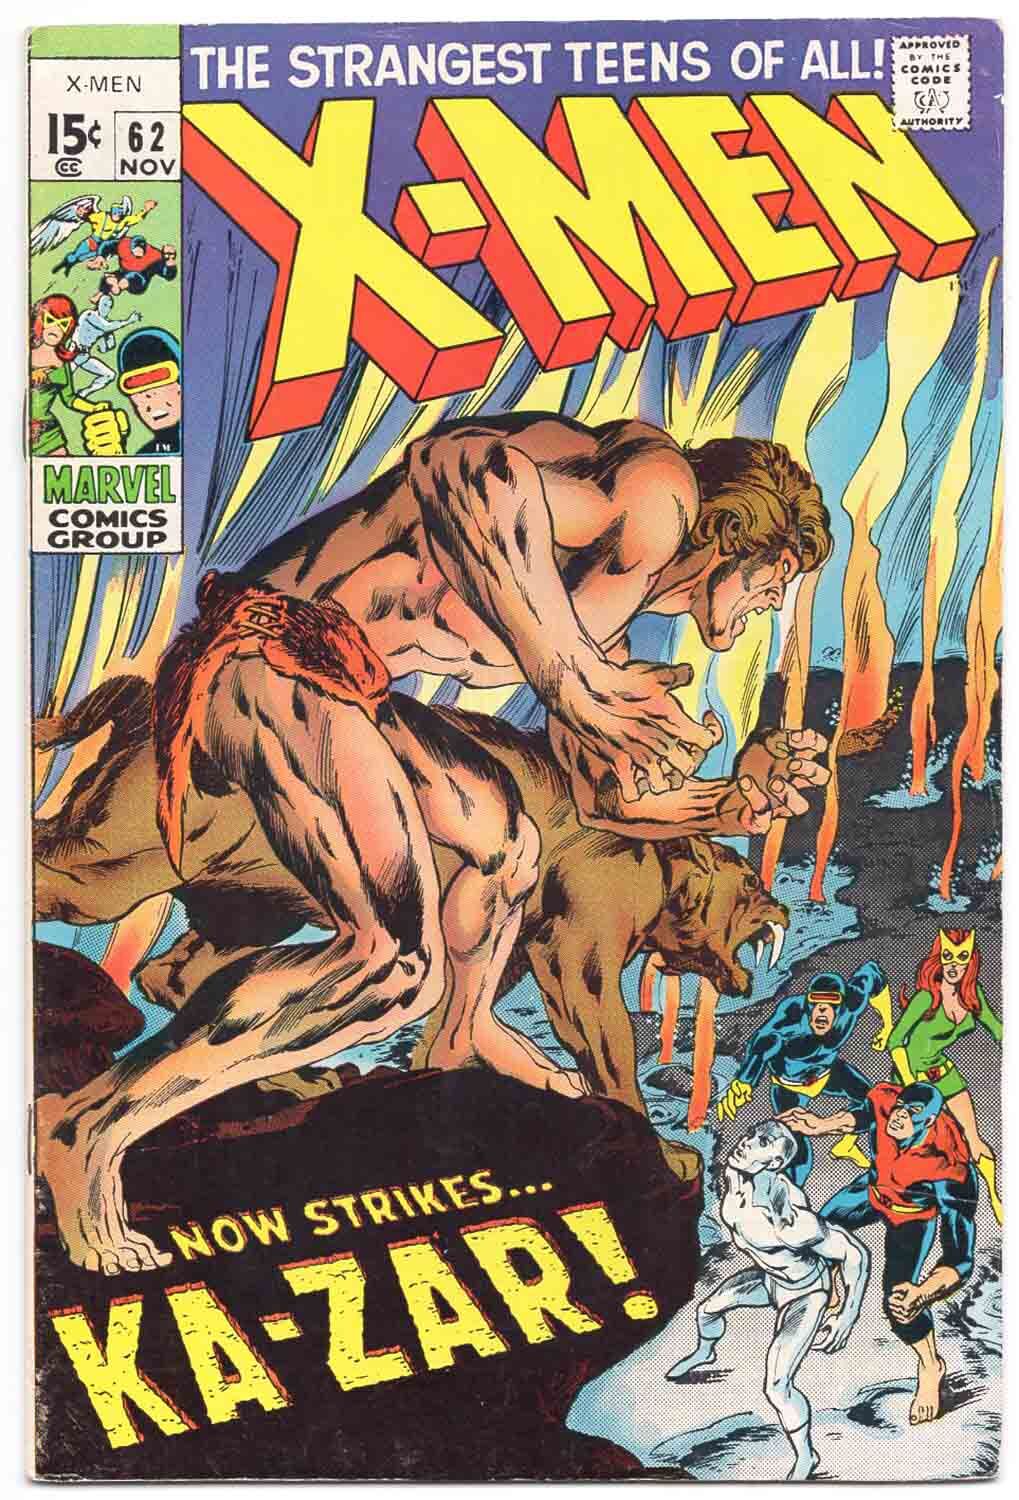 X-Men #62